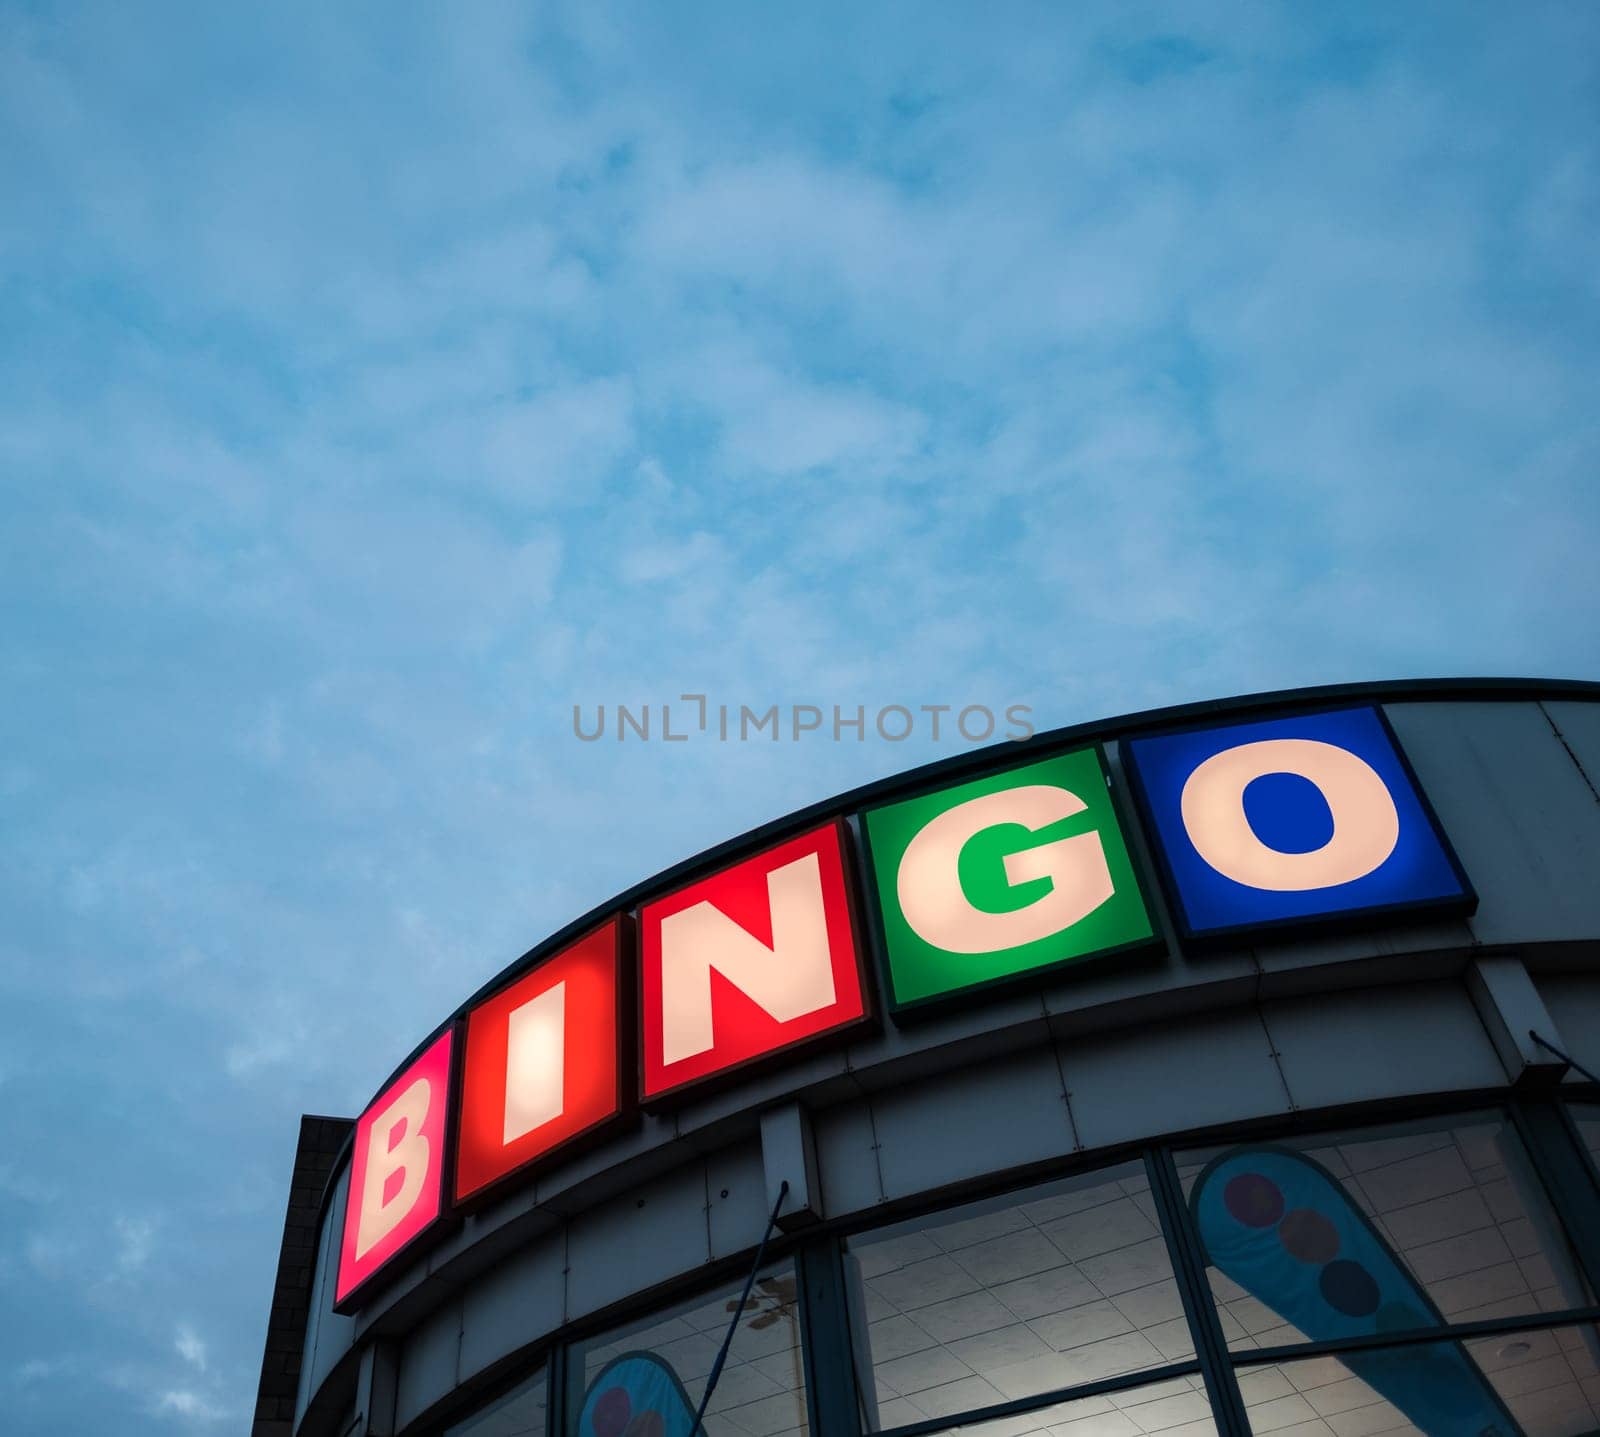 Bingo Hall Sign In The UK by mrdoomits